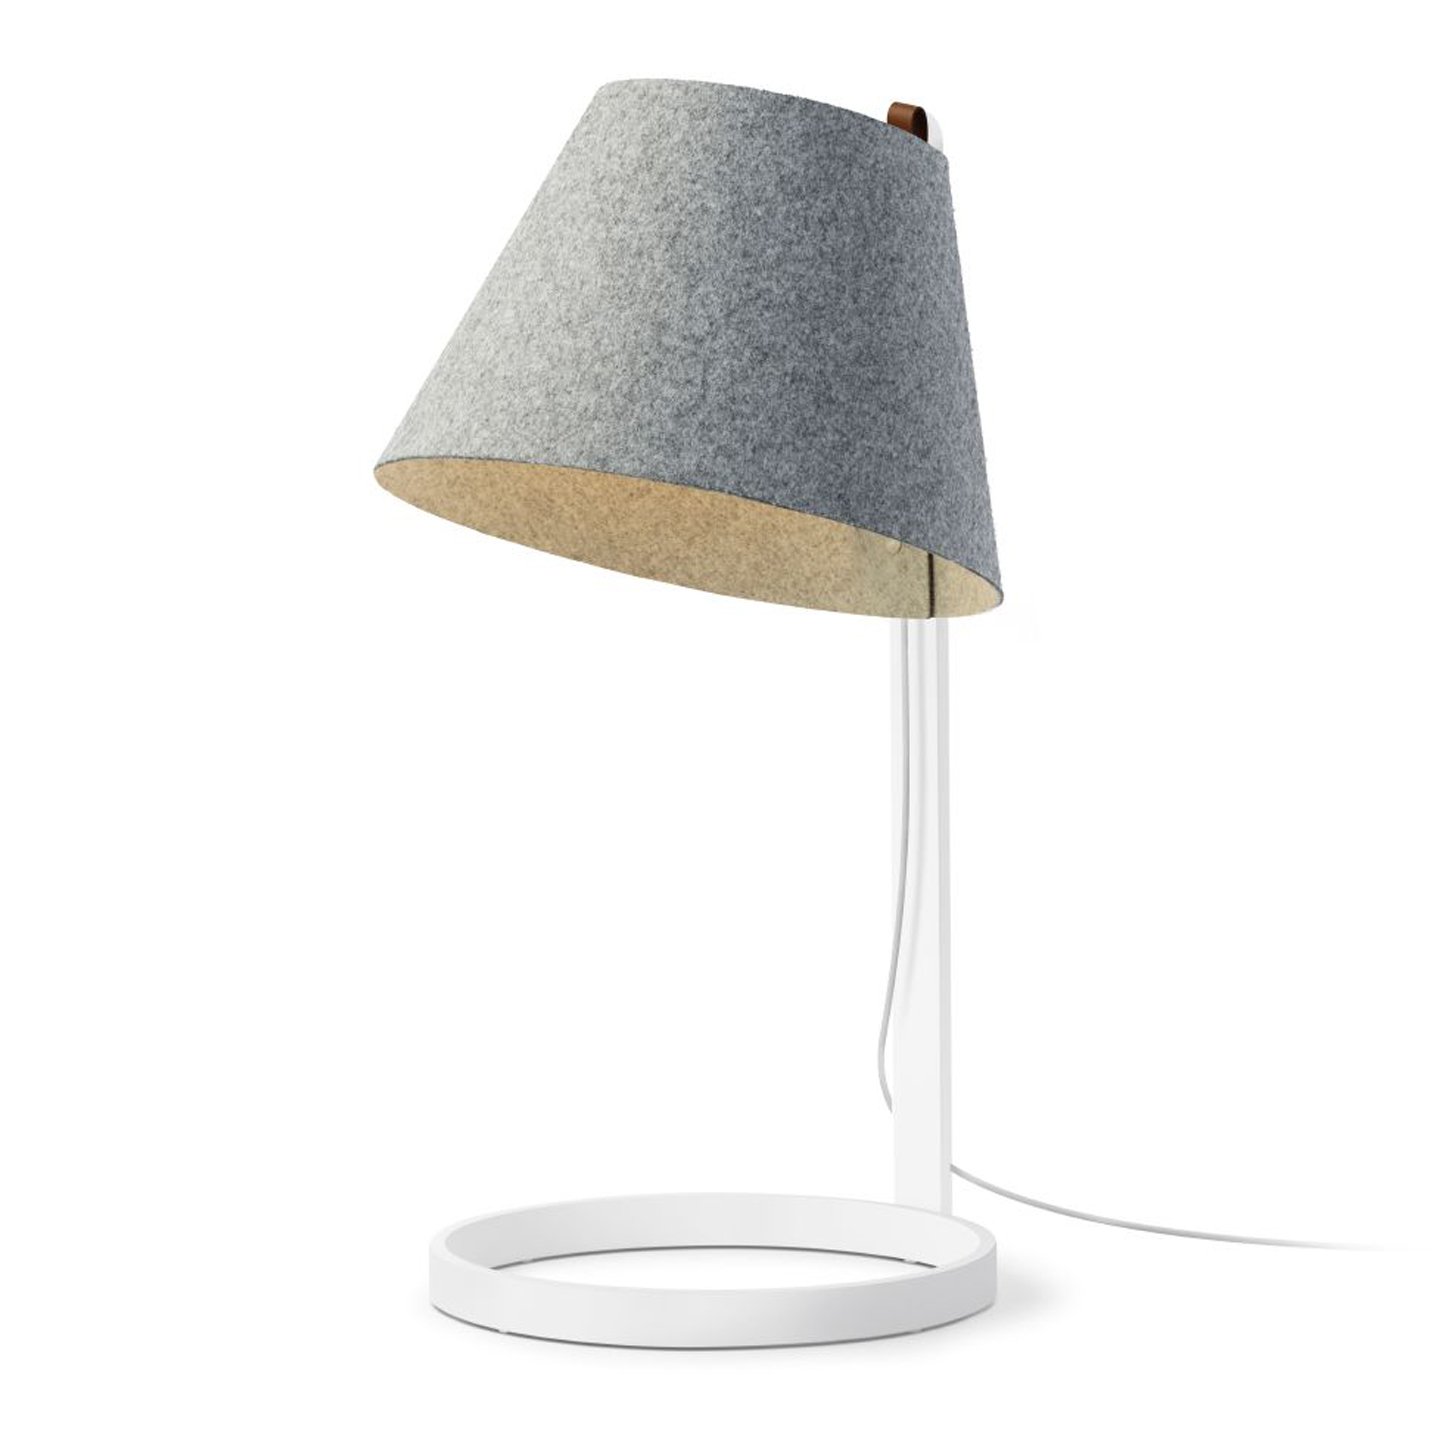 Haworth Lana Lighting desk lamp in grey color